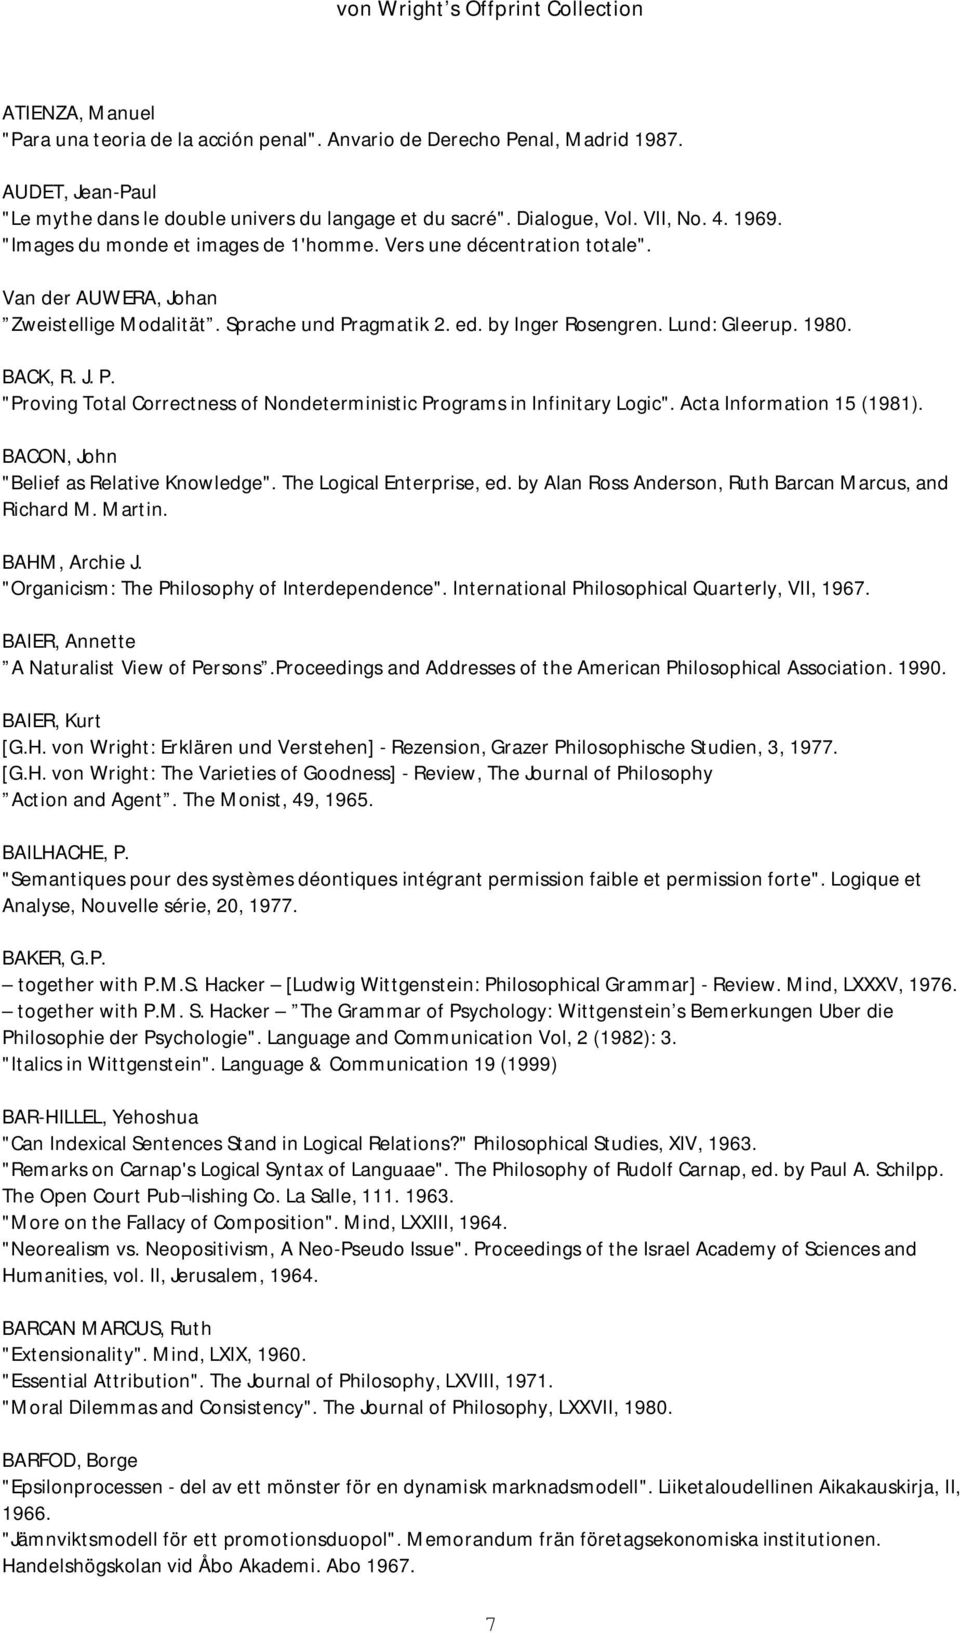 agmatik 2. ed. by Inger Rosengren. Lund: Gleerup. 1980. BACK, R. J. P. "Proving Total Correctness of Nondeterministic Programs in Infinitary Logic". Acta Information 15 (1981).